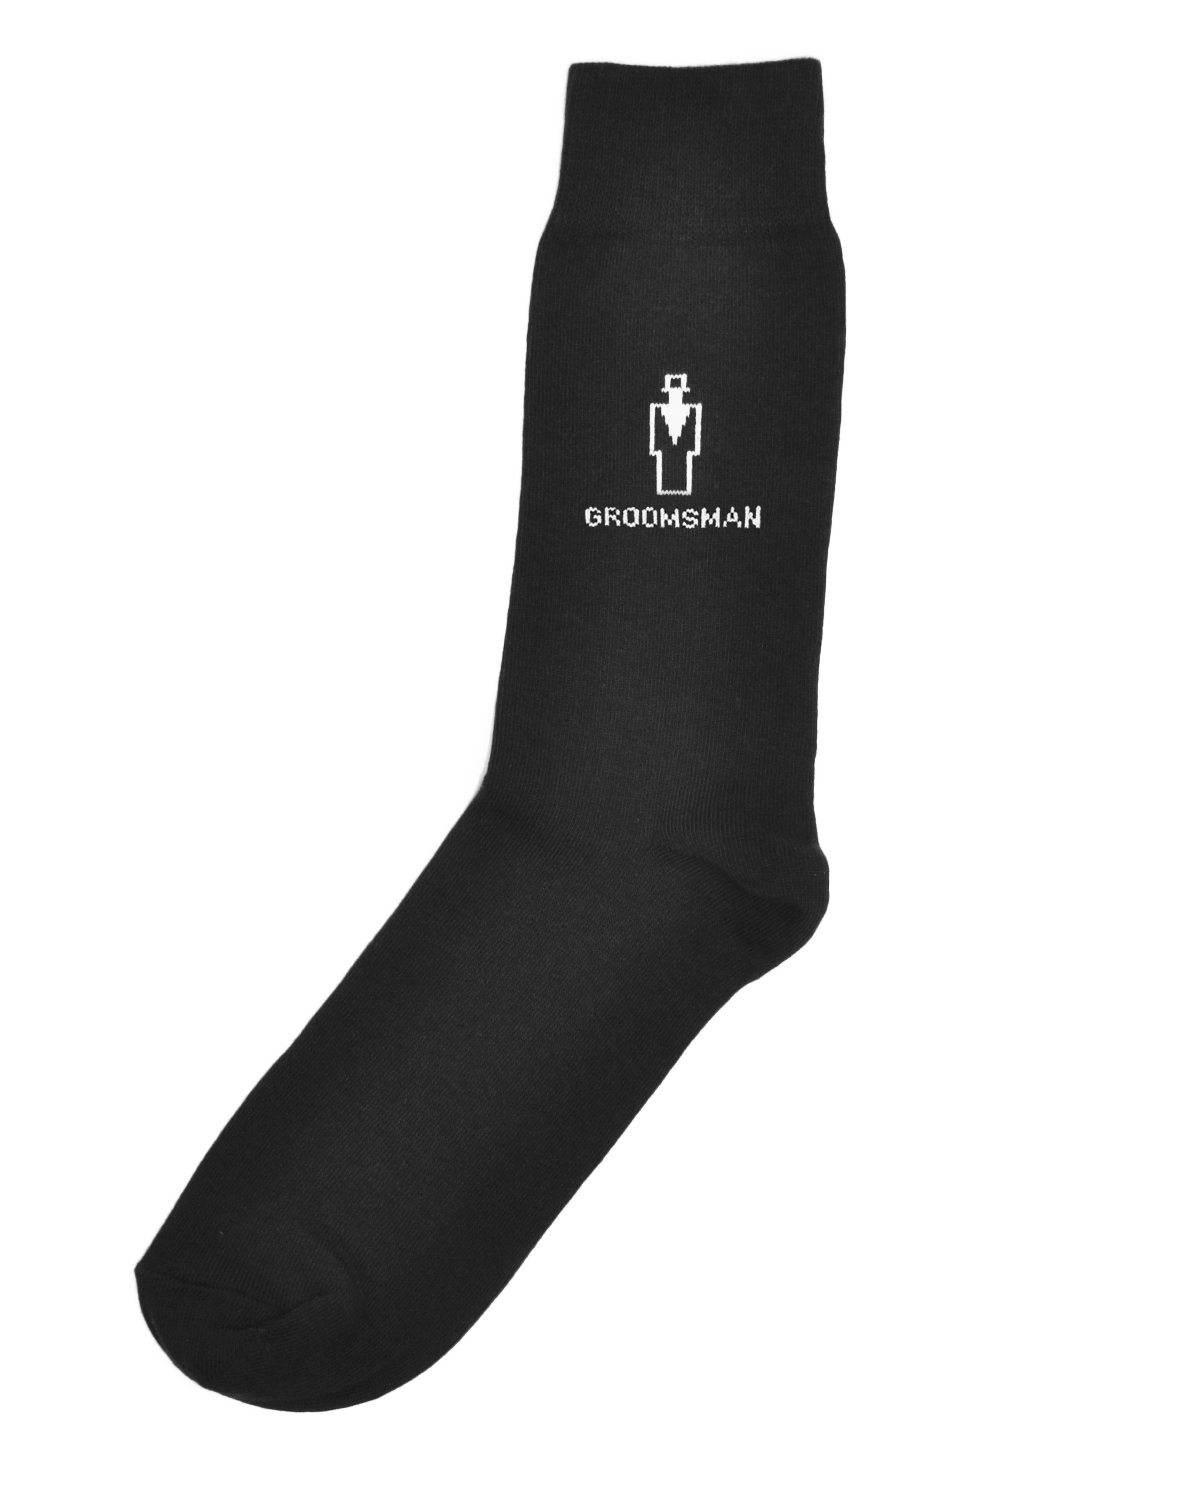 Black Groomsman Socks - Formal Tailor